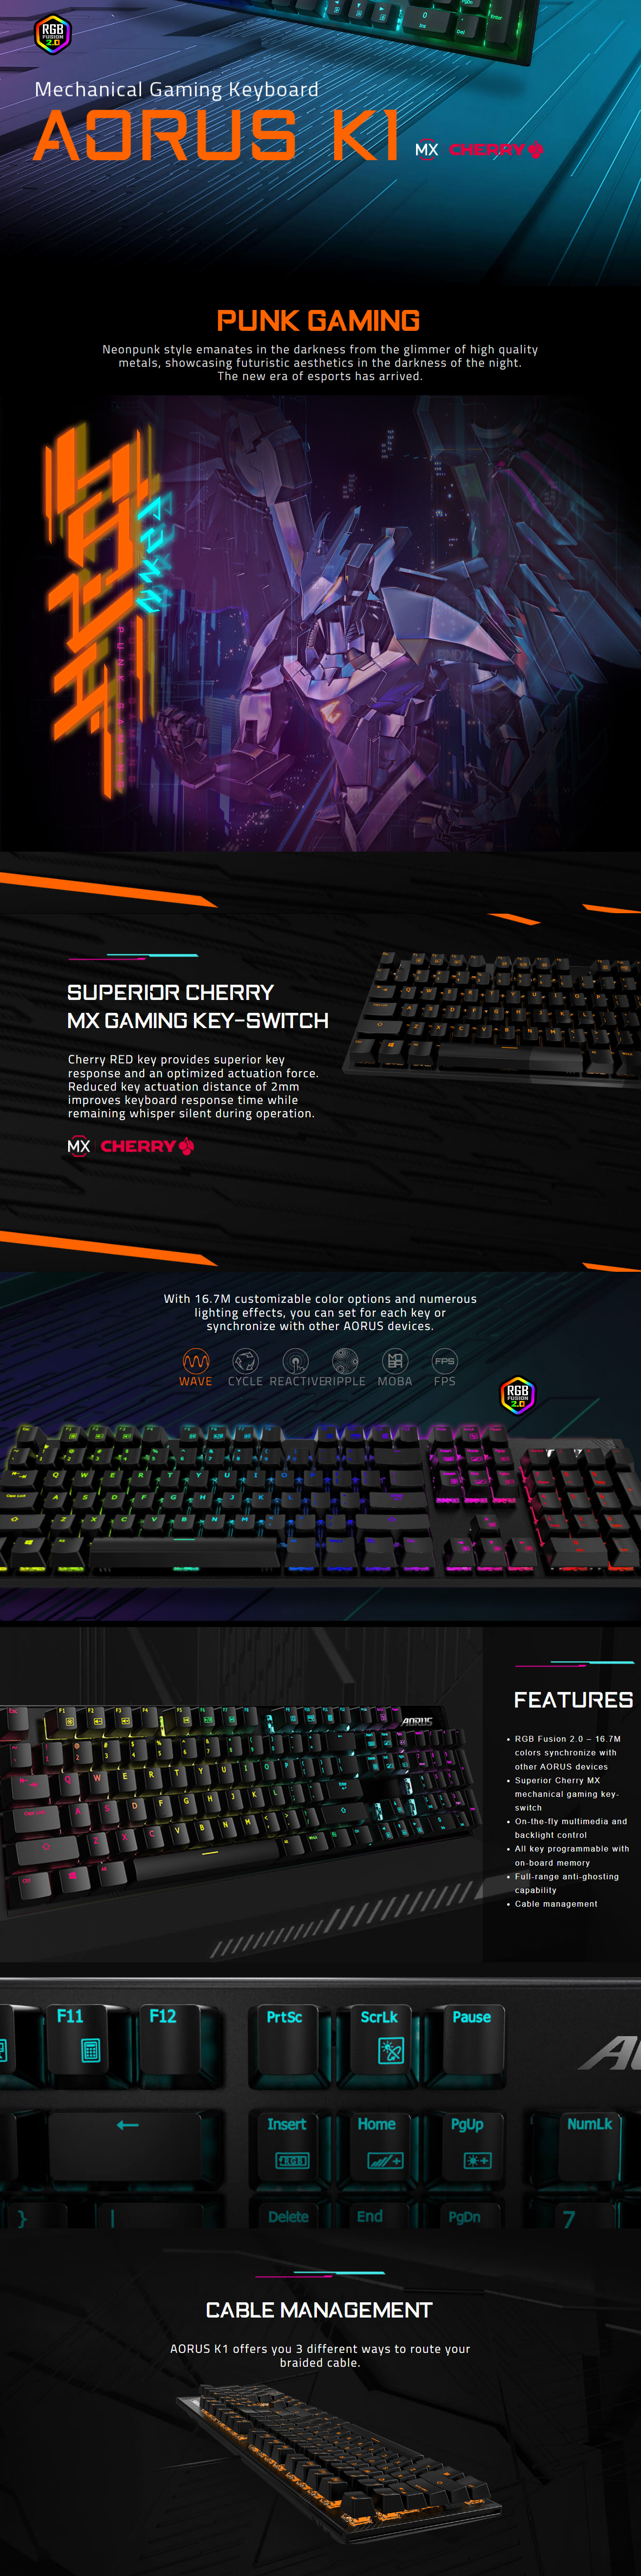 Keyboards-Gigabyte-Aorus-K1-RGB-Mechanical-Gaming-Keyboard-Cherry-MX-Red-2